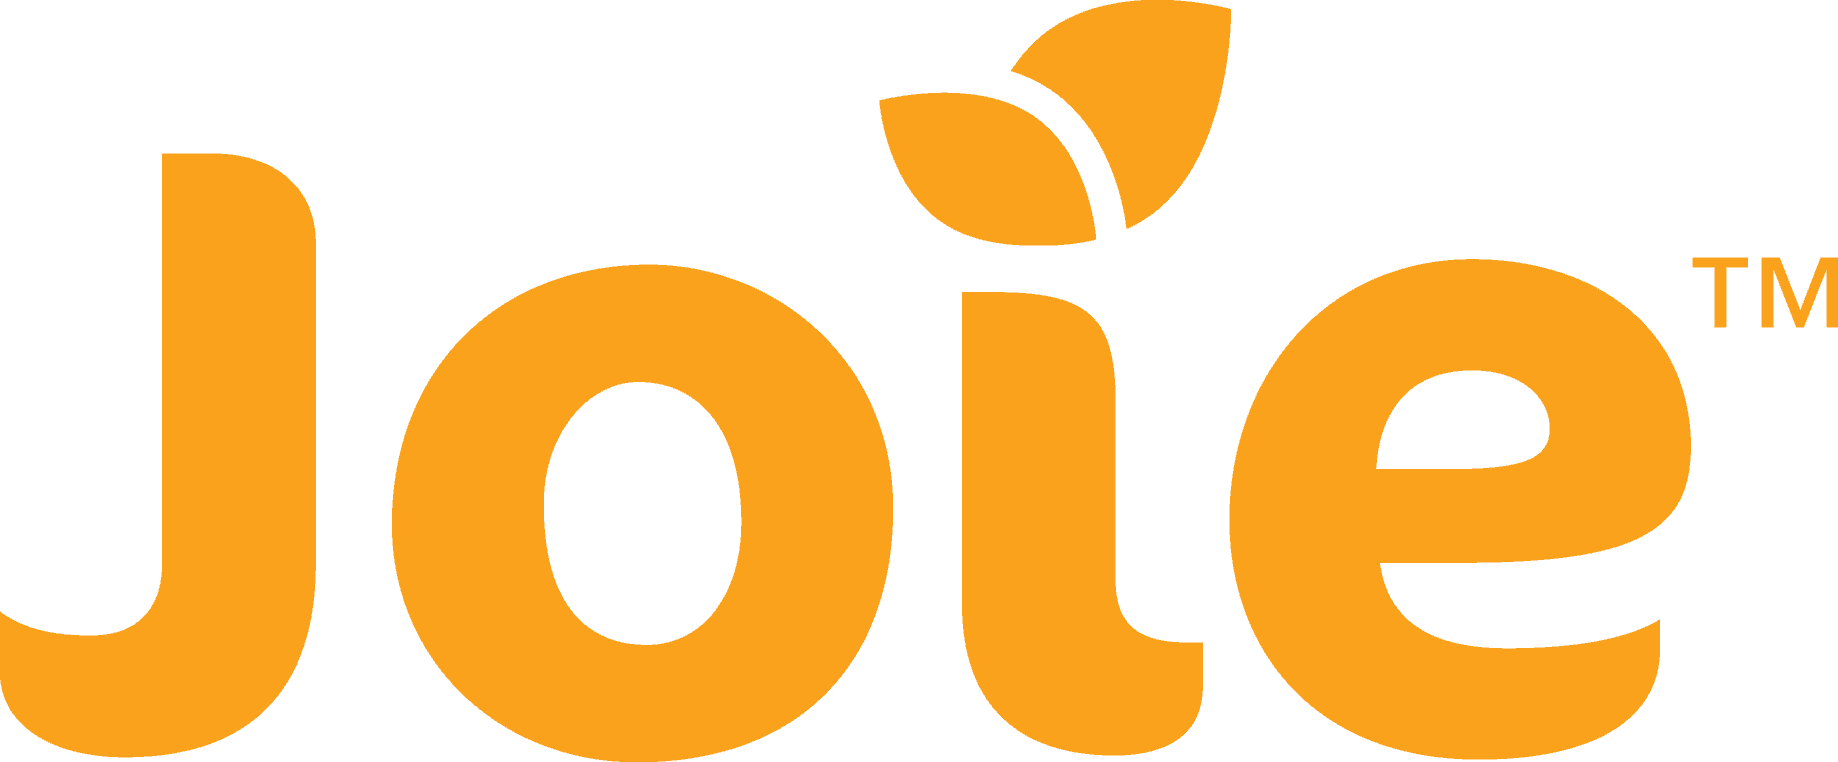 Joie-Logo